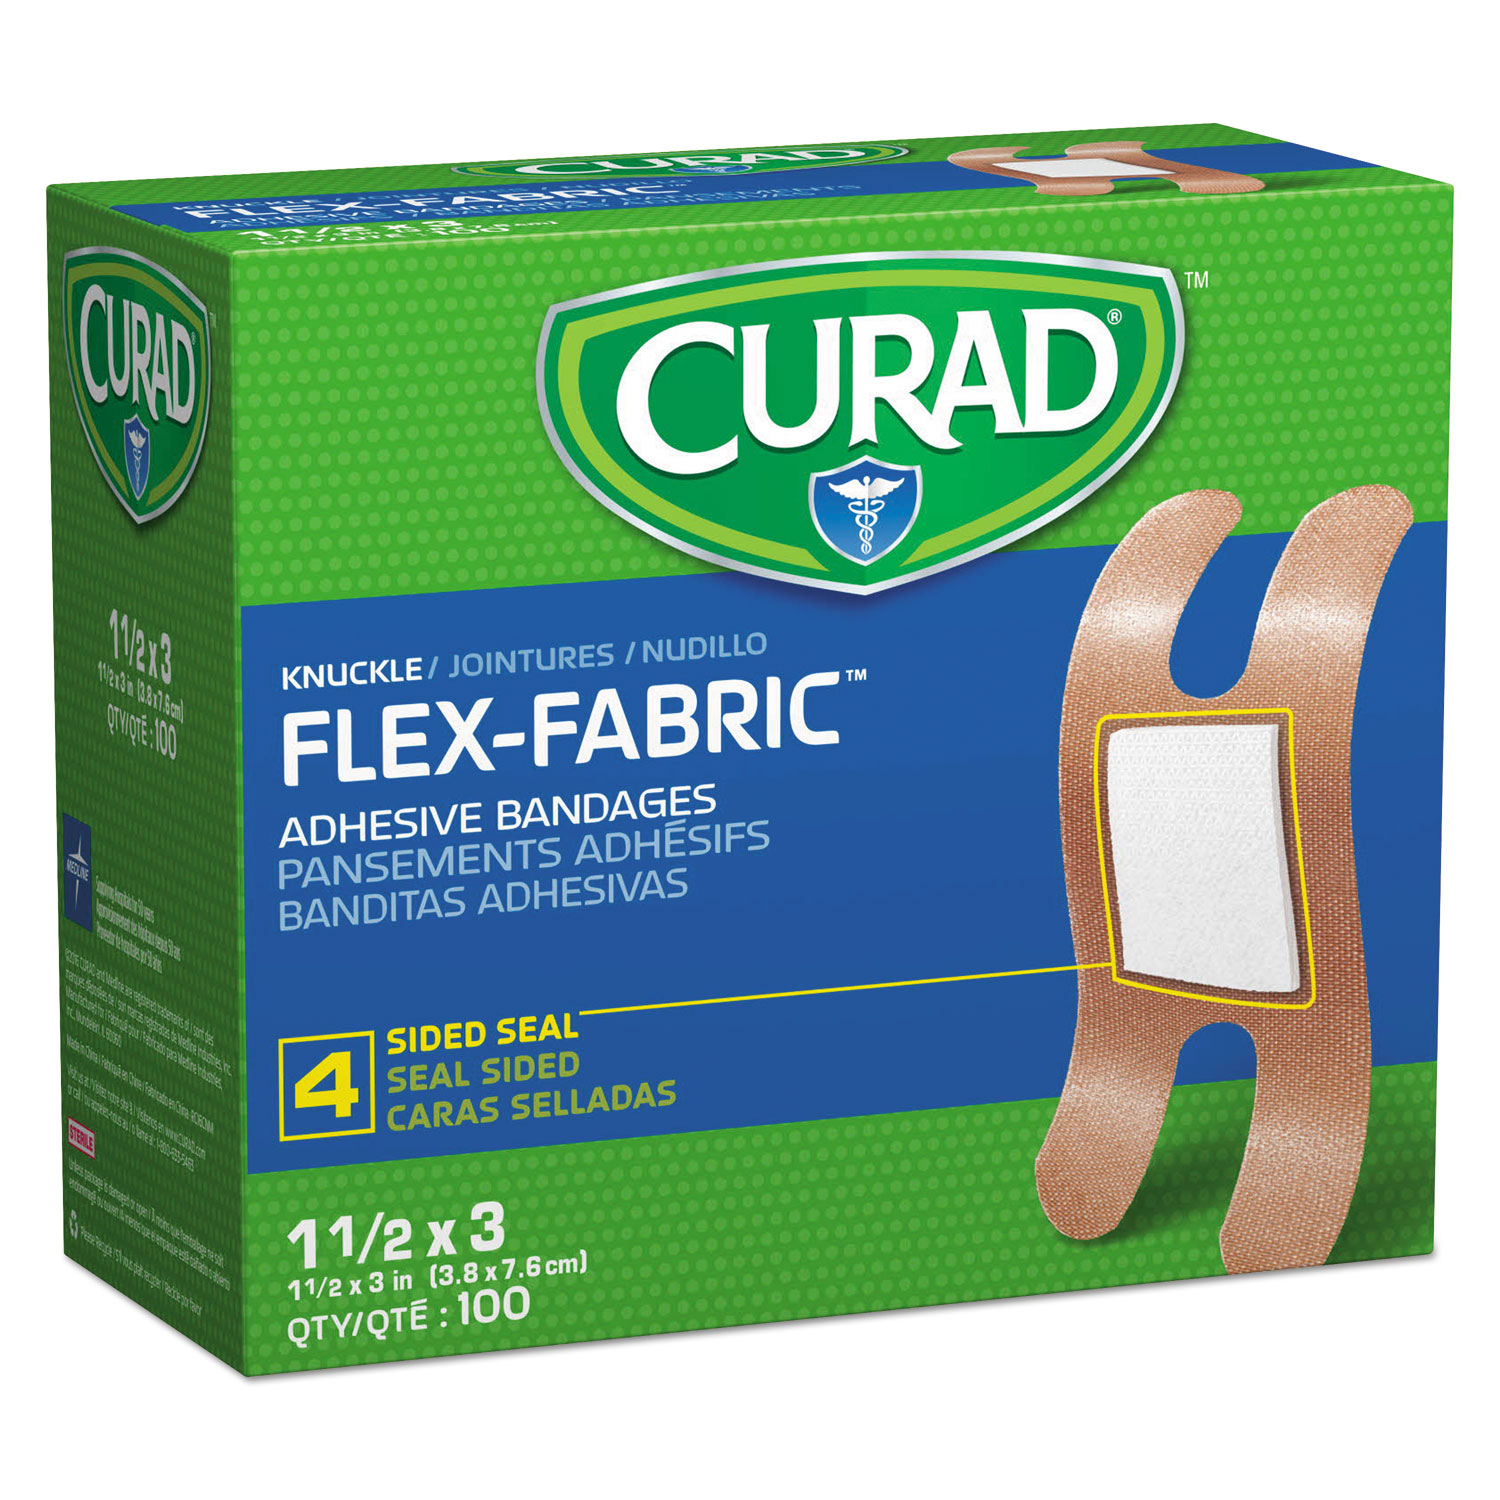  Curad NON25510 Flex Fabric Bandages, Knuckle, 100/Box (MIINON25510) 